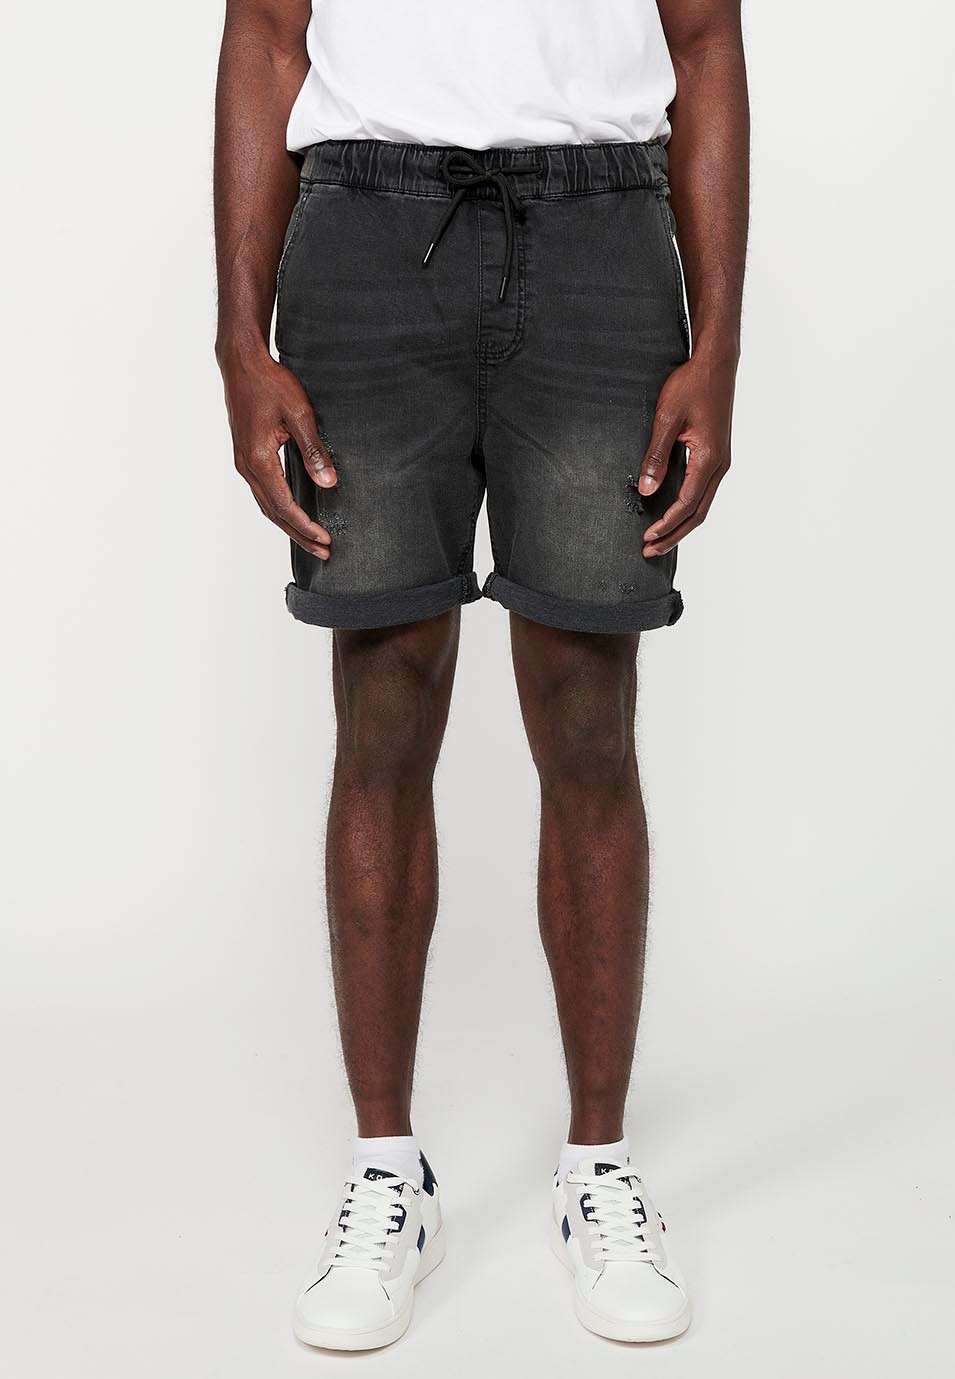 Bermuda Jogger in Denim-Optik, schwarze Farbe für Herren